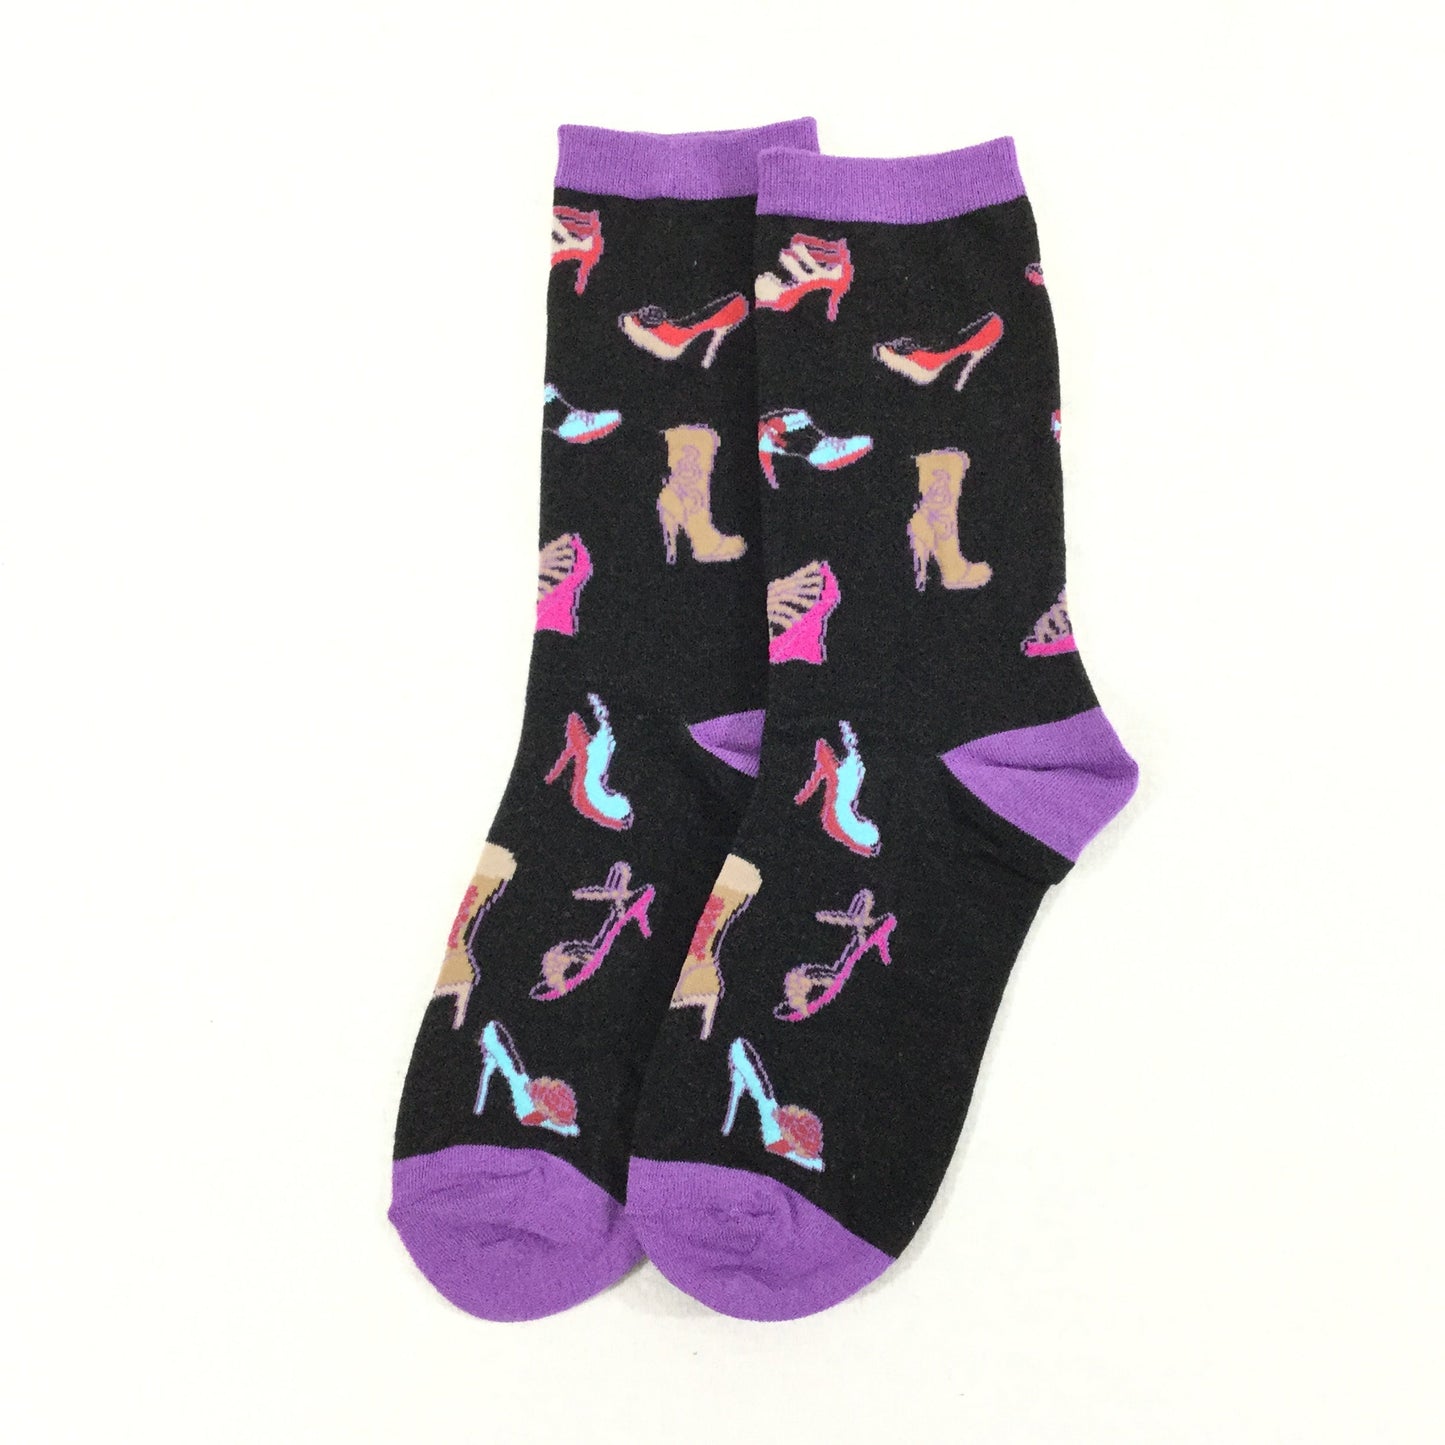 Shoe Lover Crew Socks - Premium simple from Tooksie - Just $7.99! Shop now at Tooksie